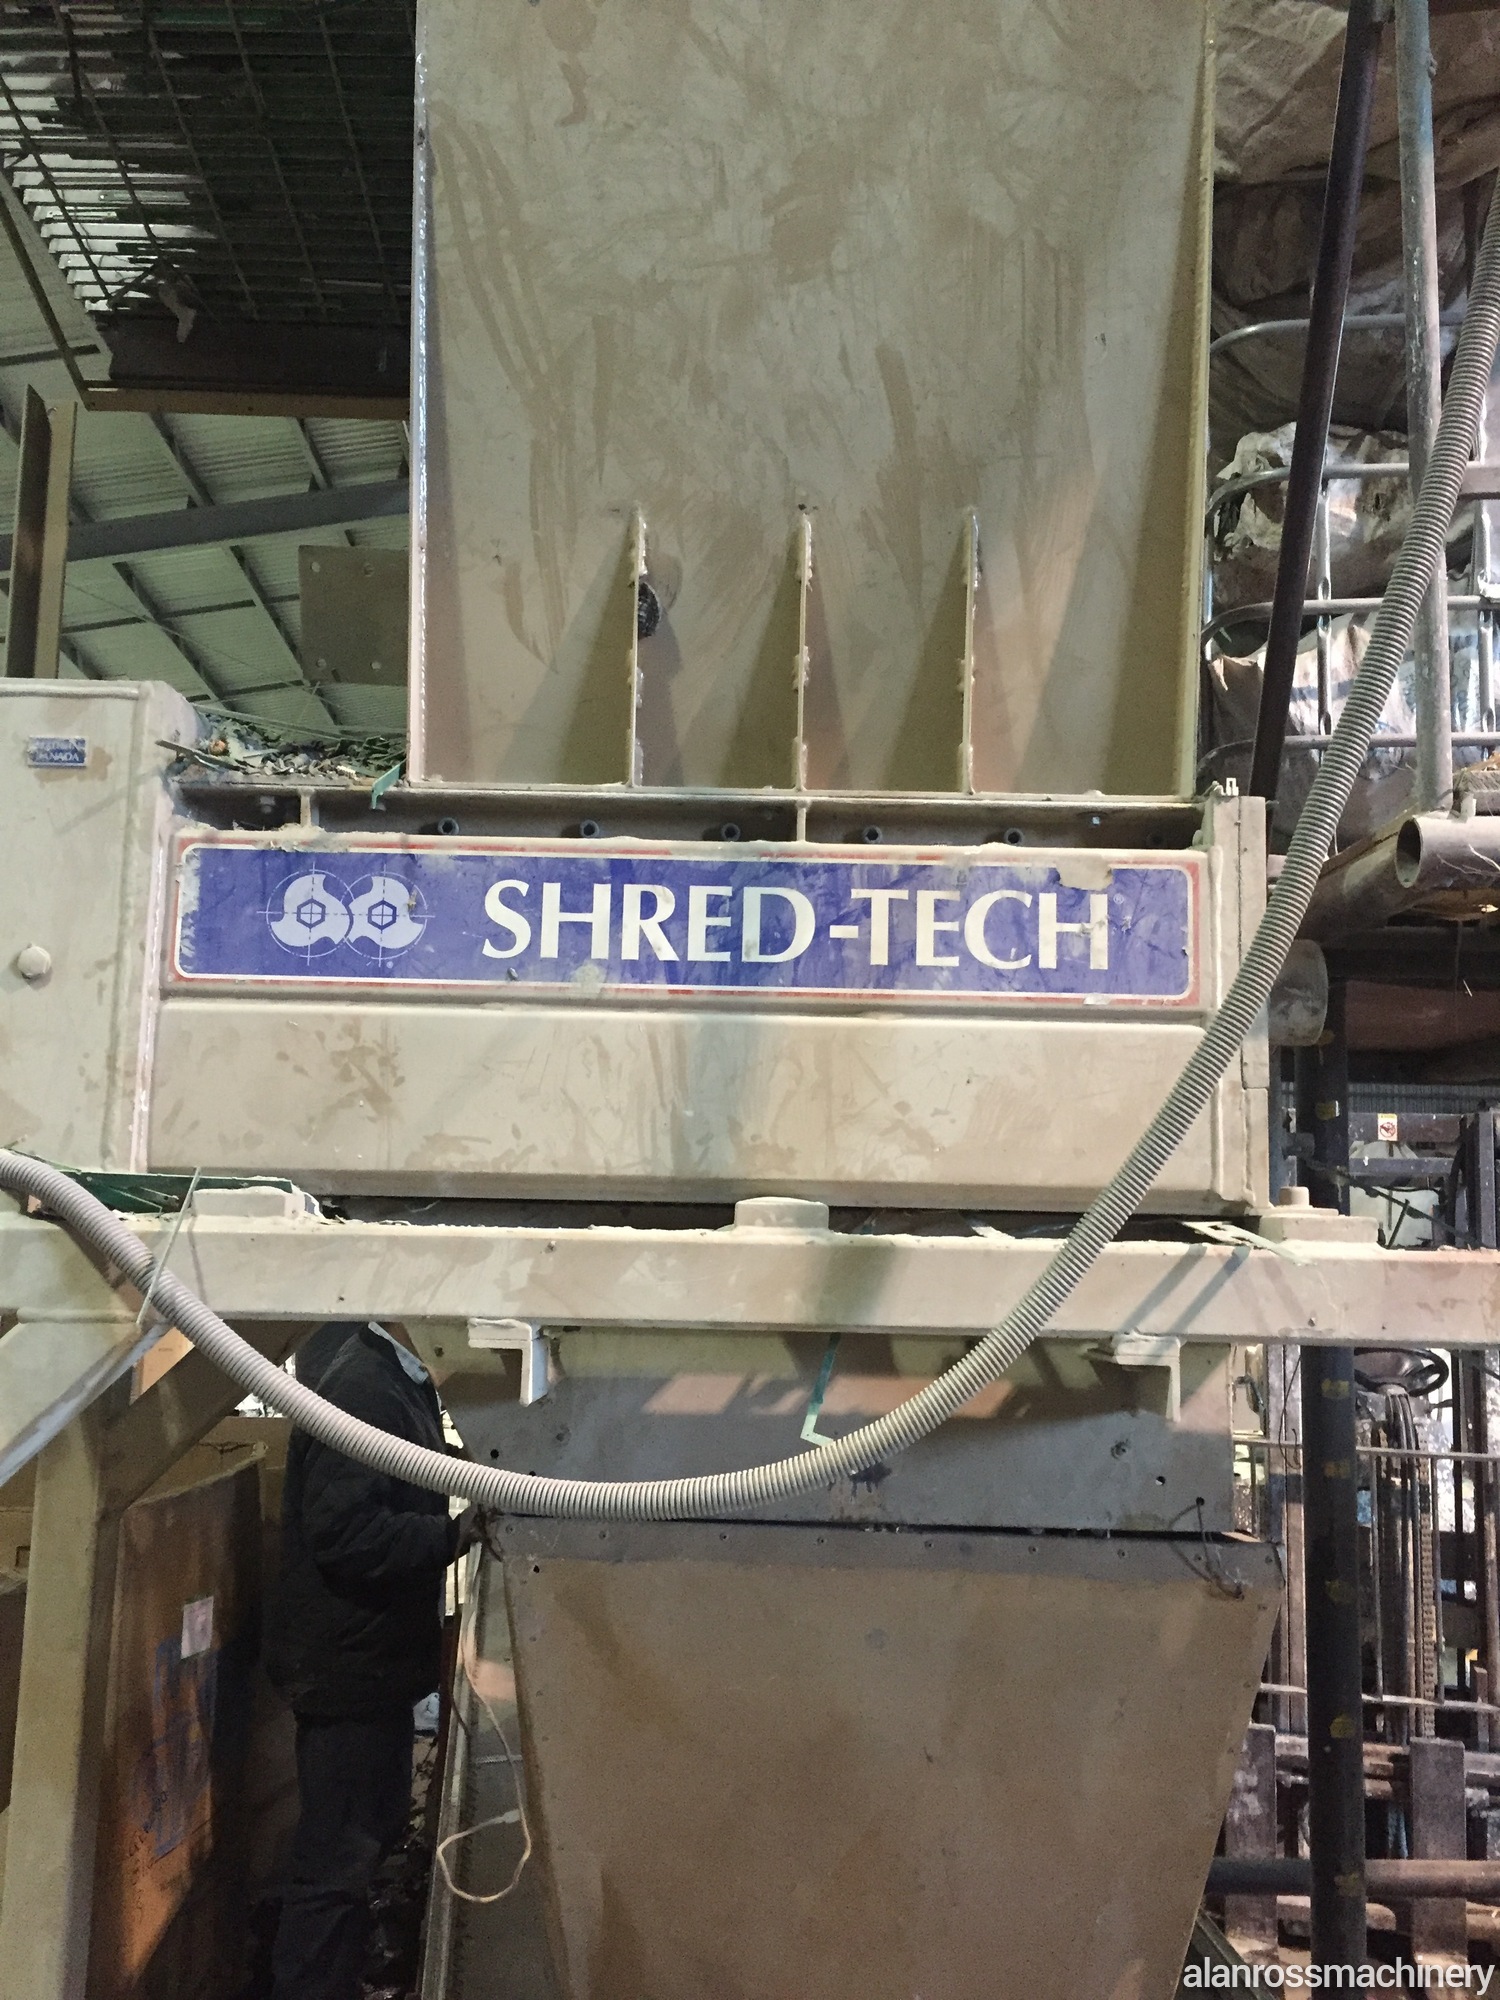 SHRED-TECH UNASSIGNED Shredders | Alan Ross Machinery